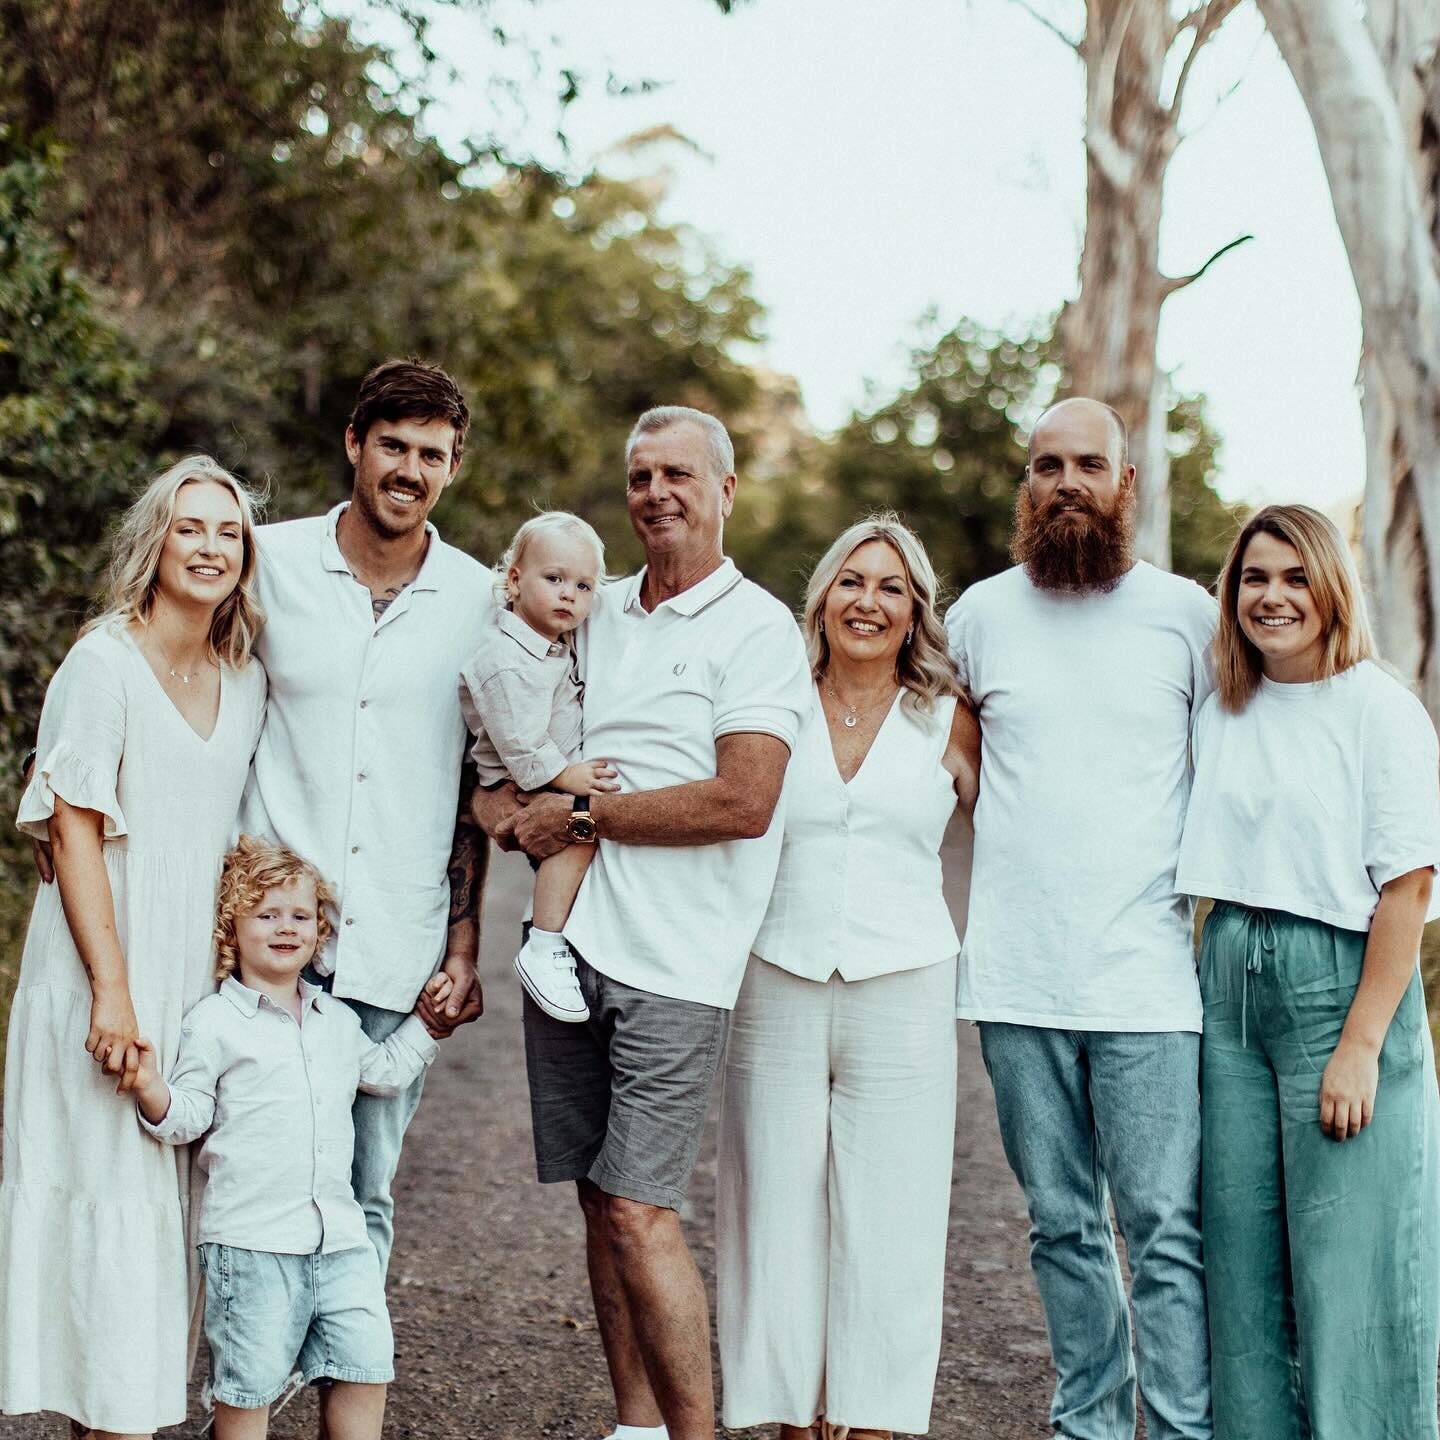 The Hurst &amp; Thompson Family!!

#familyphotography #naturalfamilyphotography #lovelocalcamden #authenticstorytelling #familysession